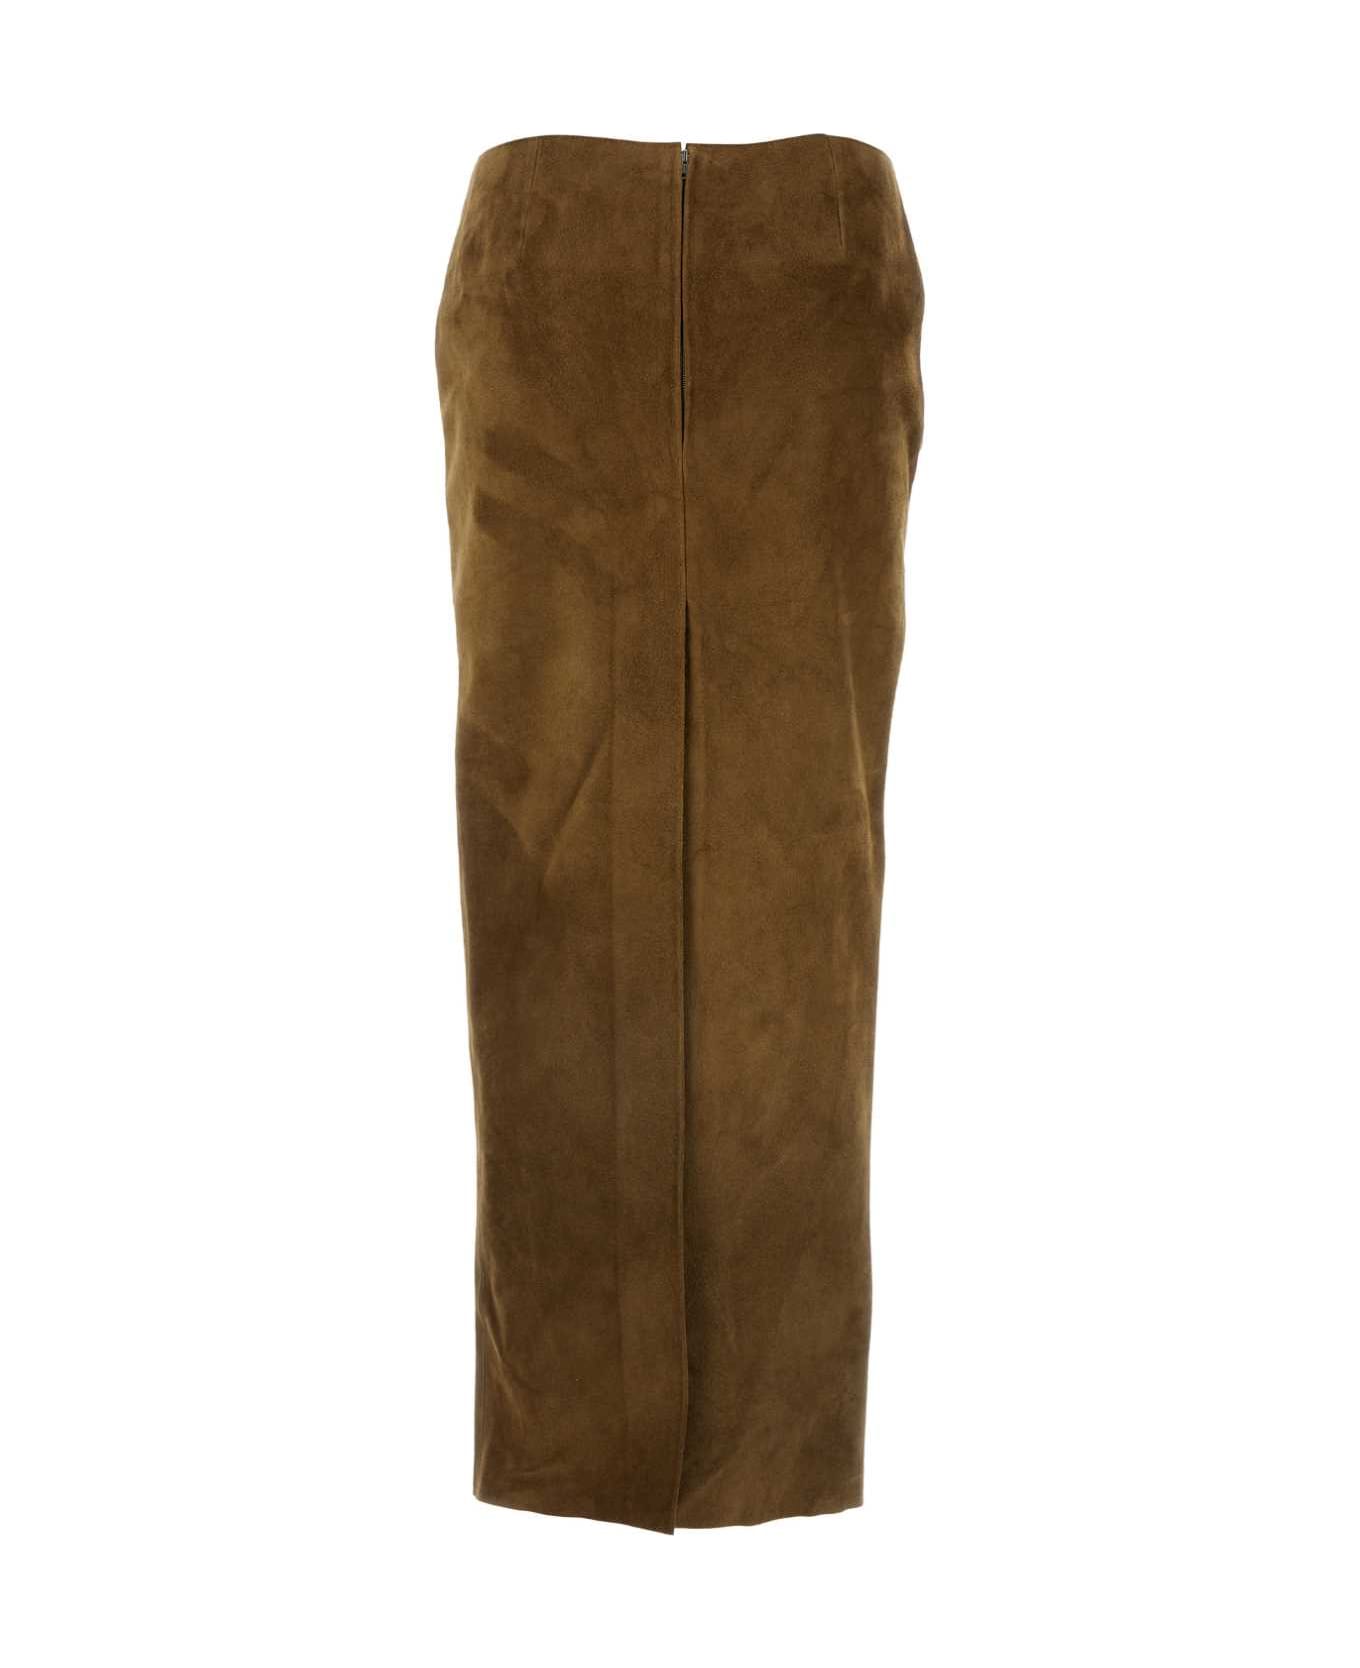 Marni Brown Suede Skirt - 00V49 スカート